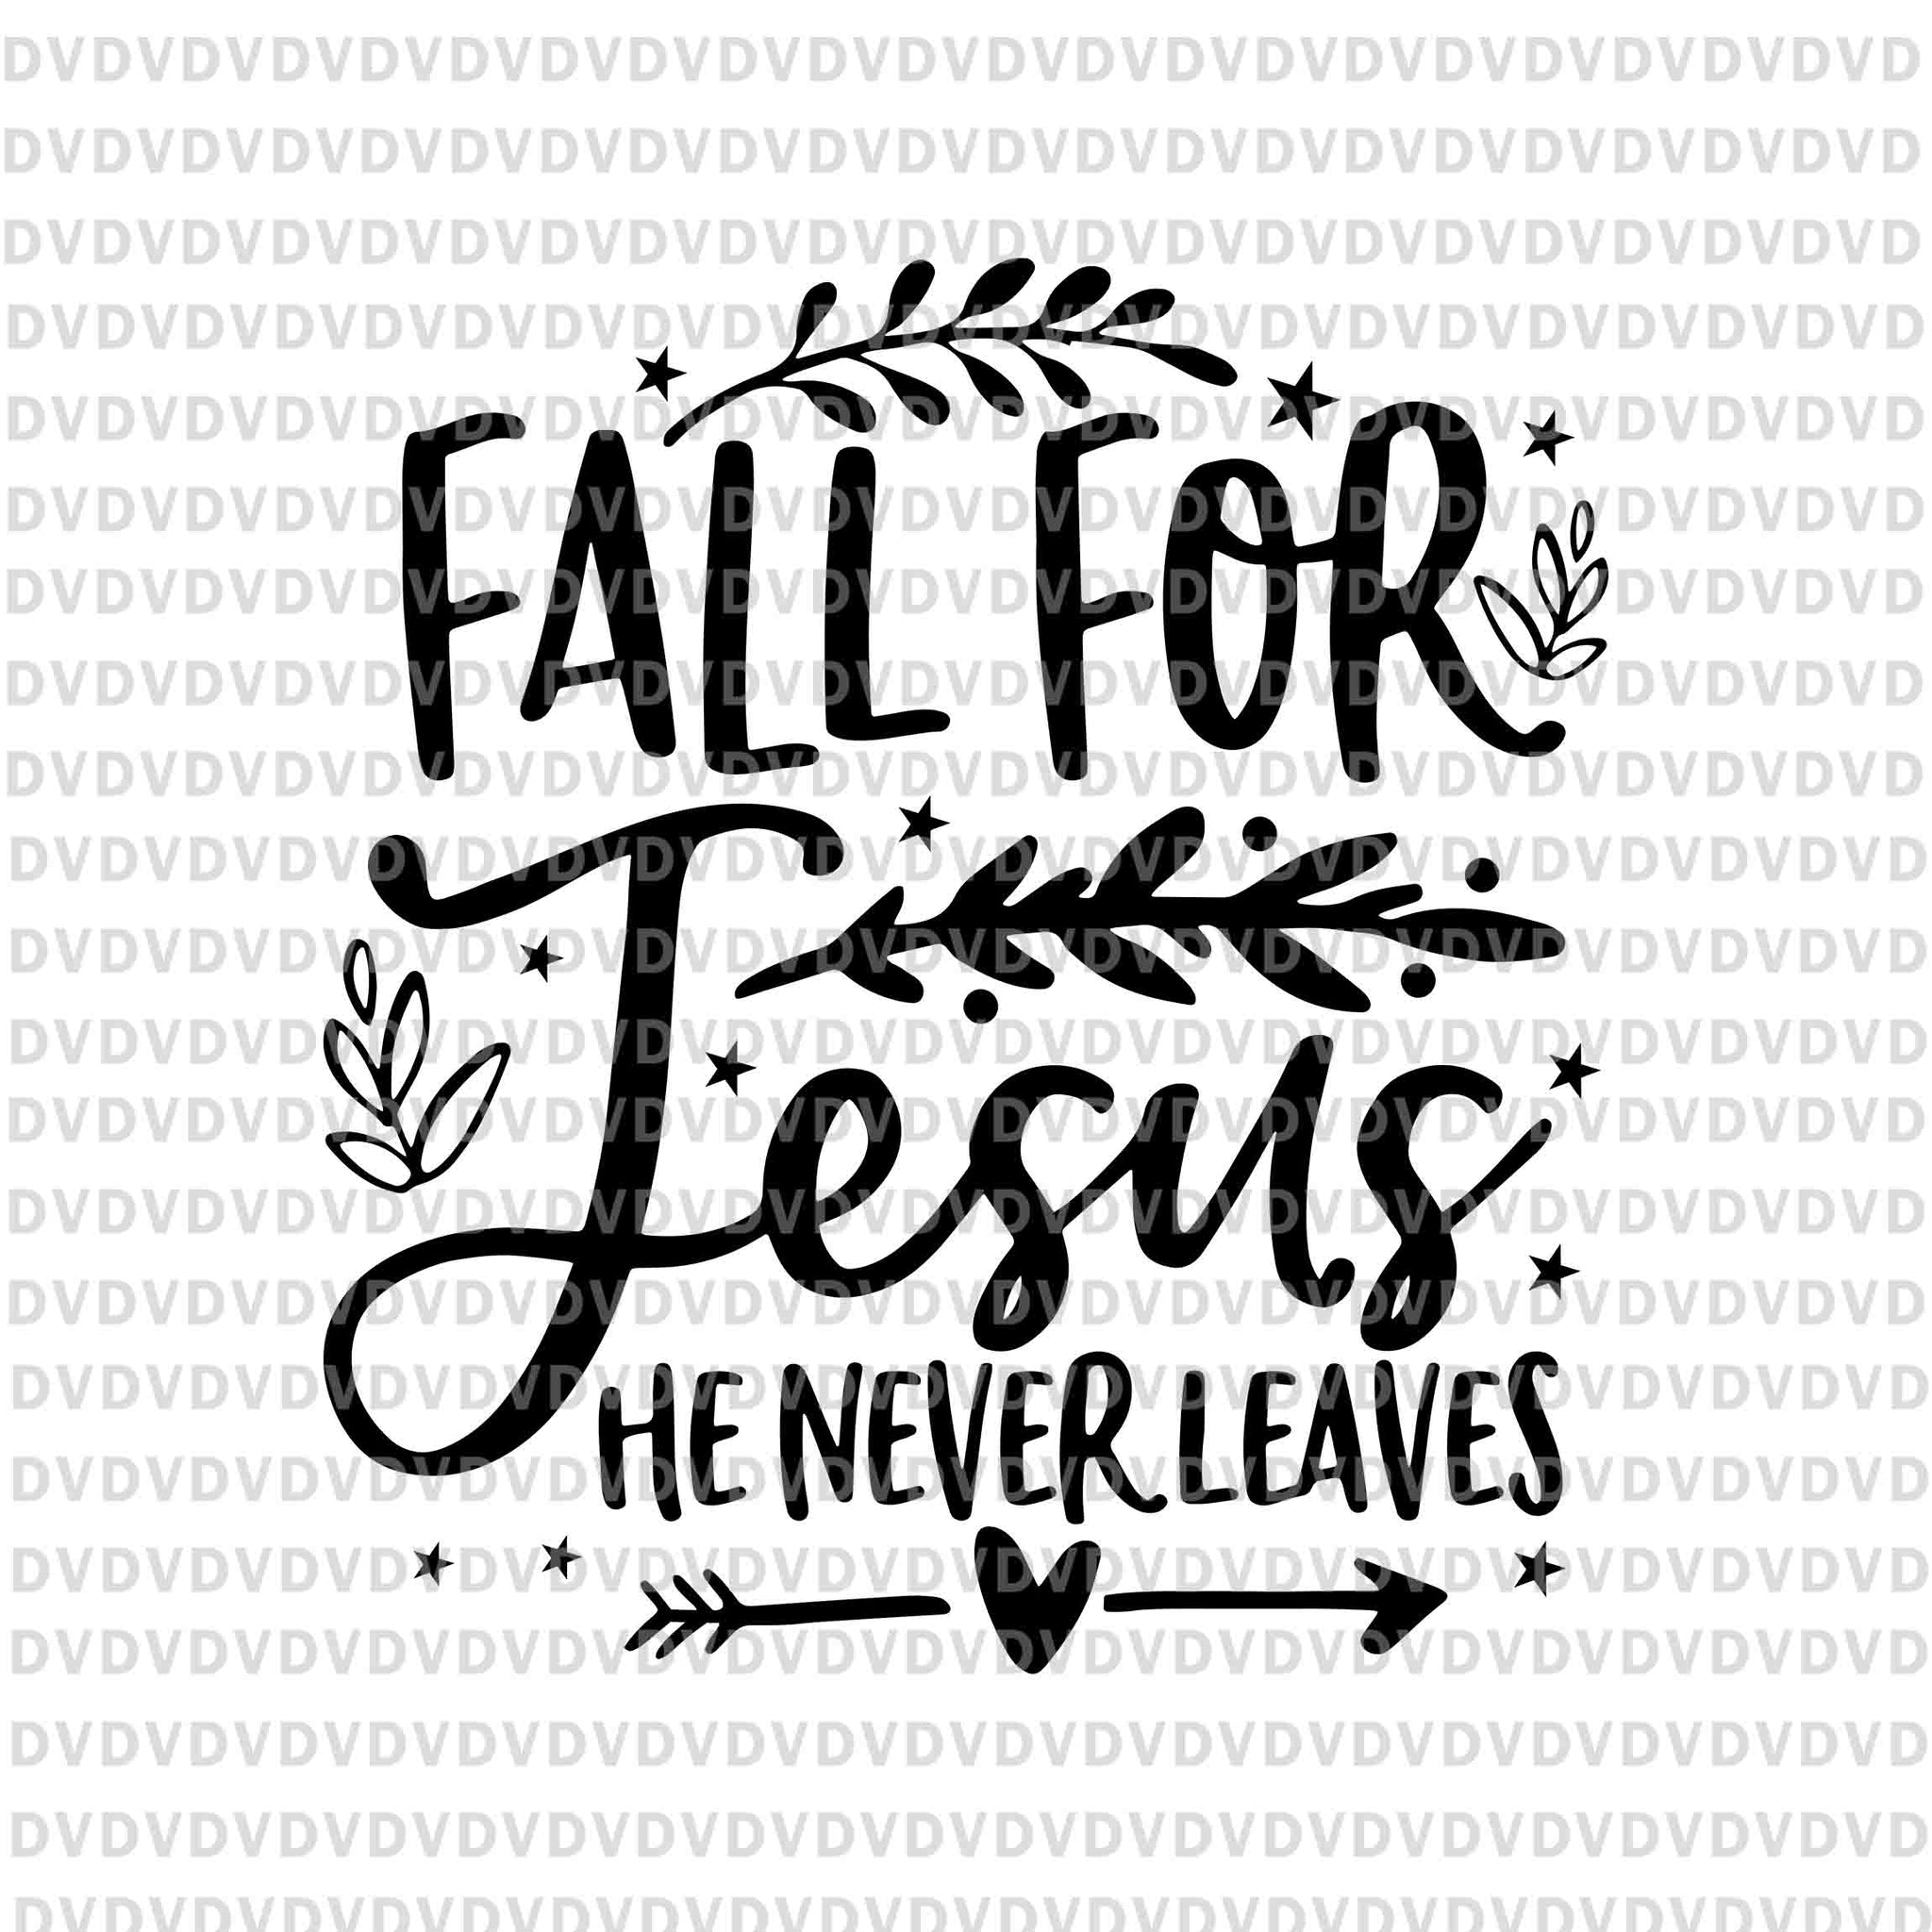 Fall For Jesus He Never Leaves Christian Svg, Lover Fall Season Svg, Season Svg, Jesus Svg, Autumn Christian Prayers Svg, Fall Jesus Svg, Jesus Quote Svg